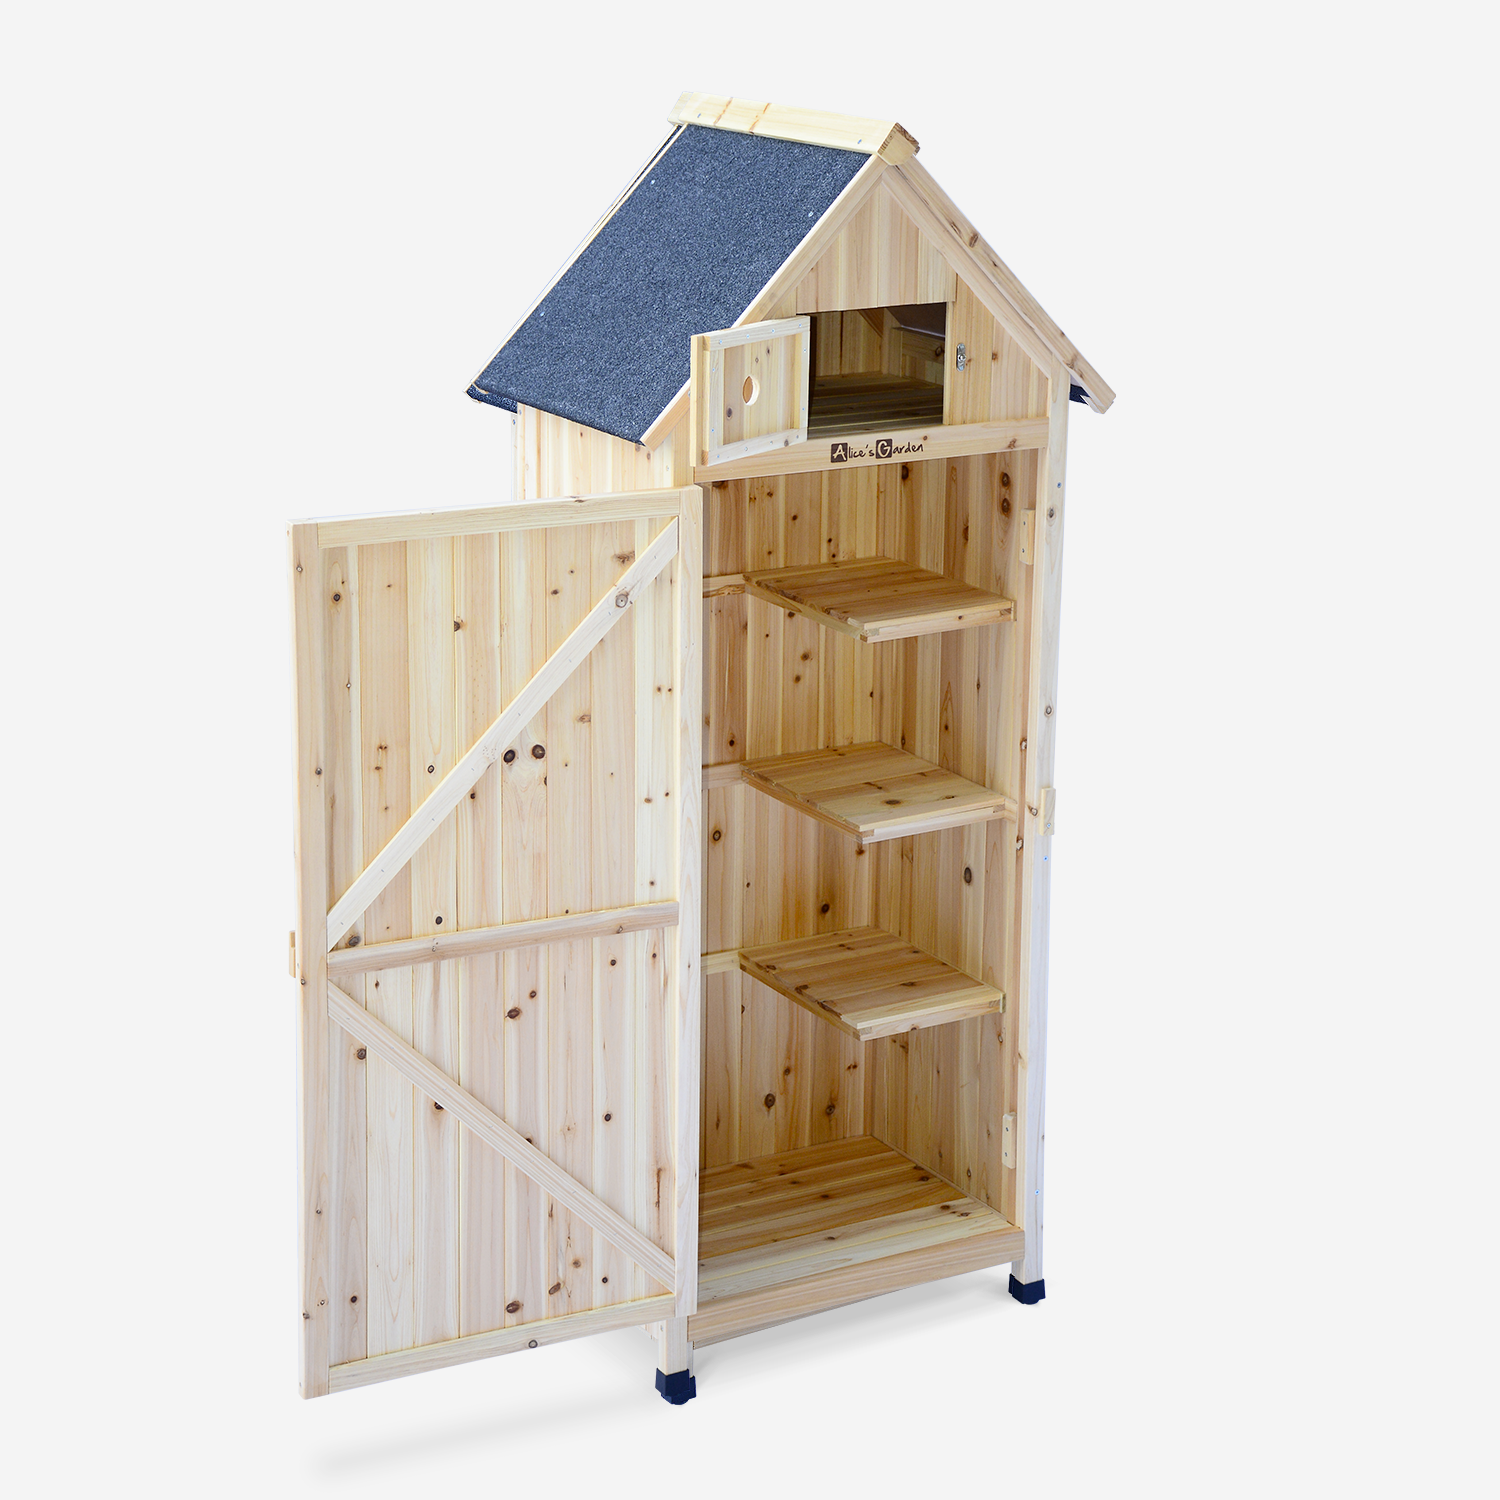 Wooden garden cabinet - 77x54.5x179 cm - Garden shed, storage cupboard, tool storage - Mimosa - Natural,sweeek,Photo2